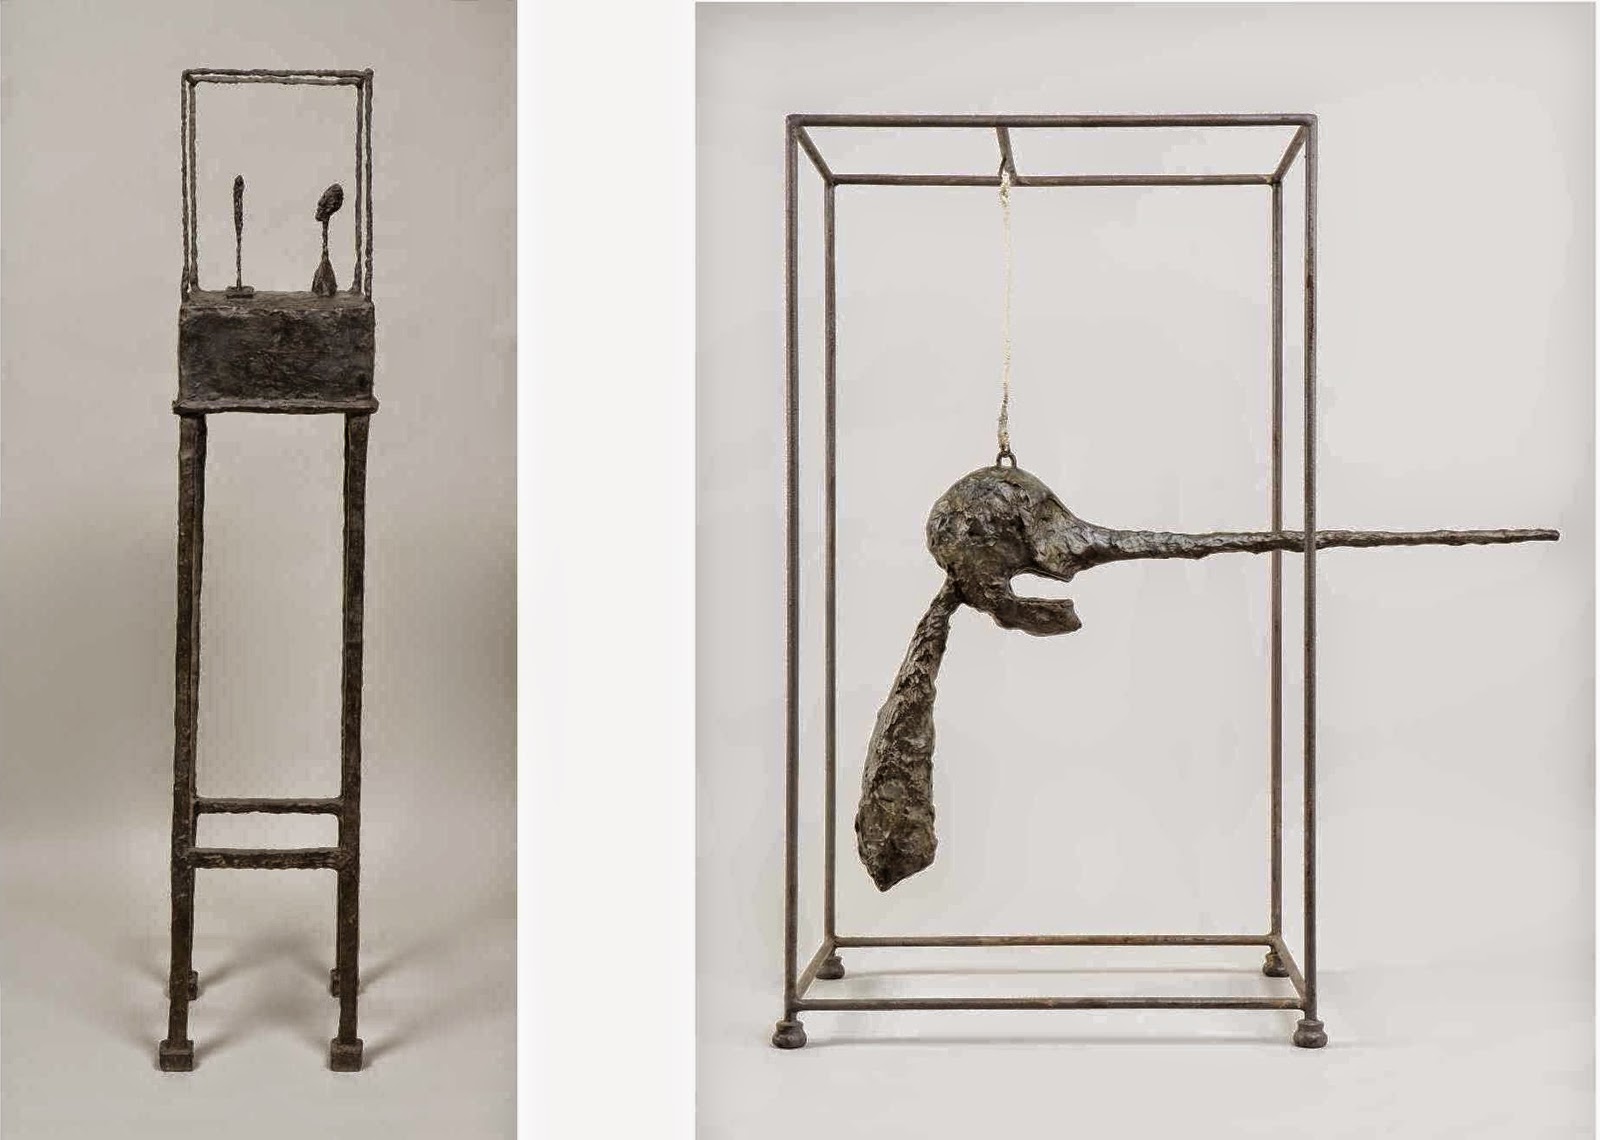 Alberto+Giacometti-1901-1966 (99).jpg